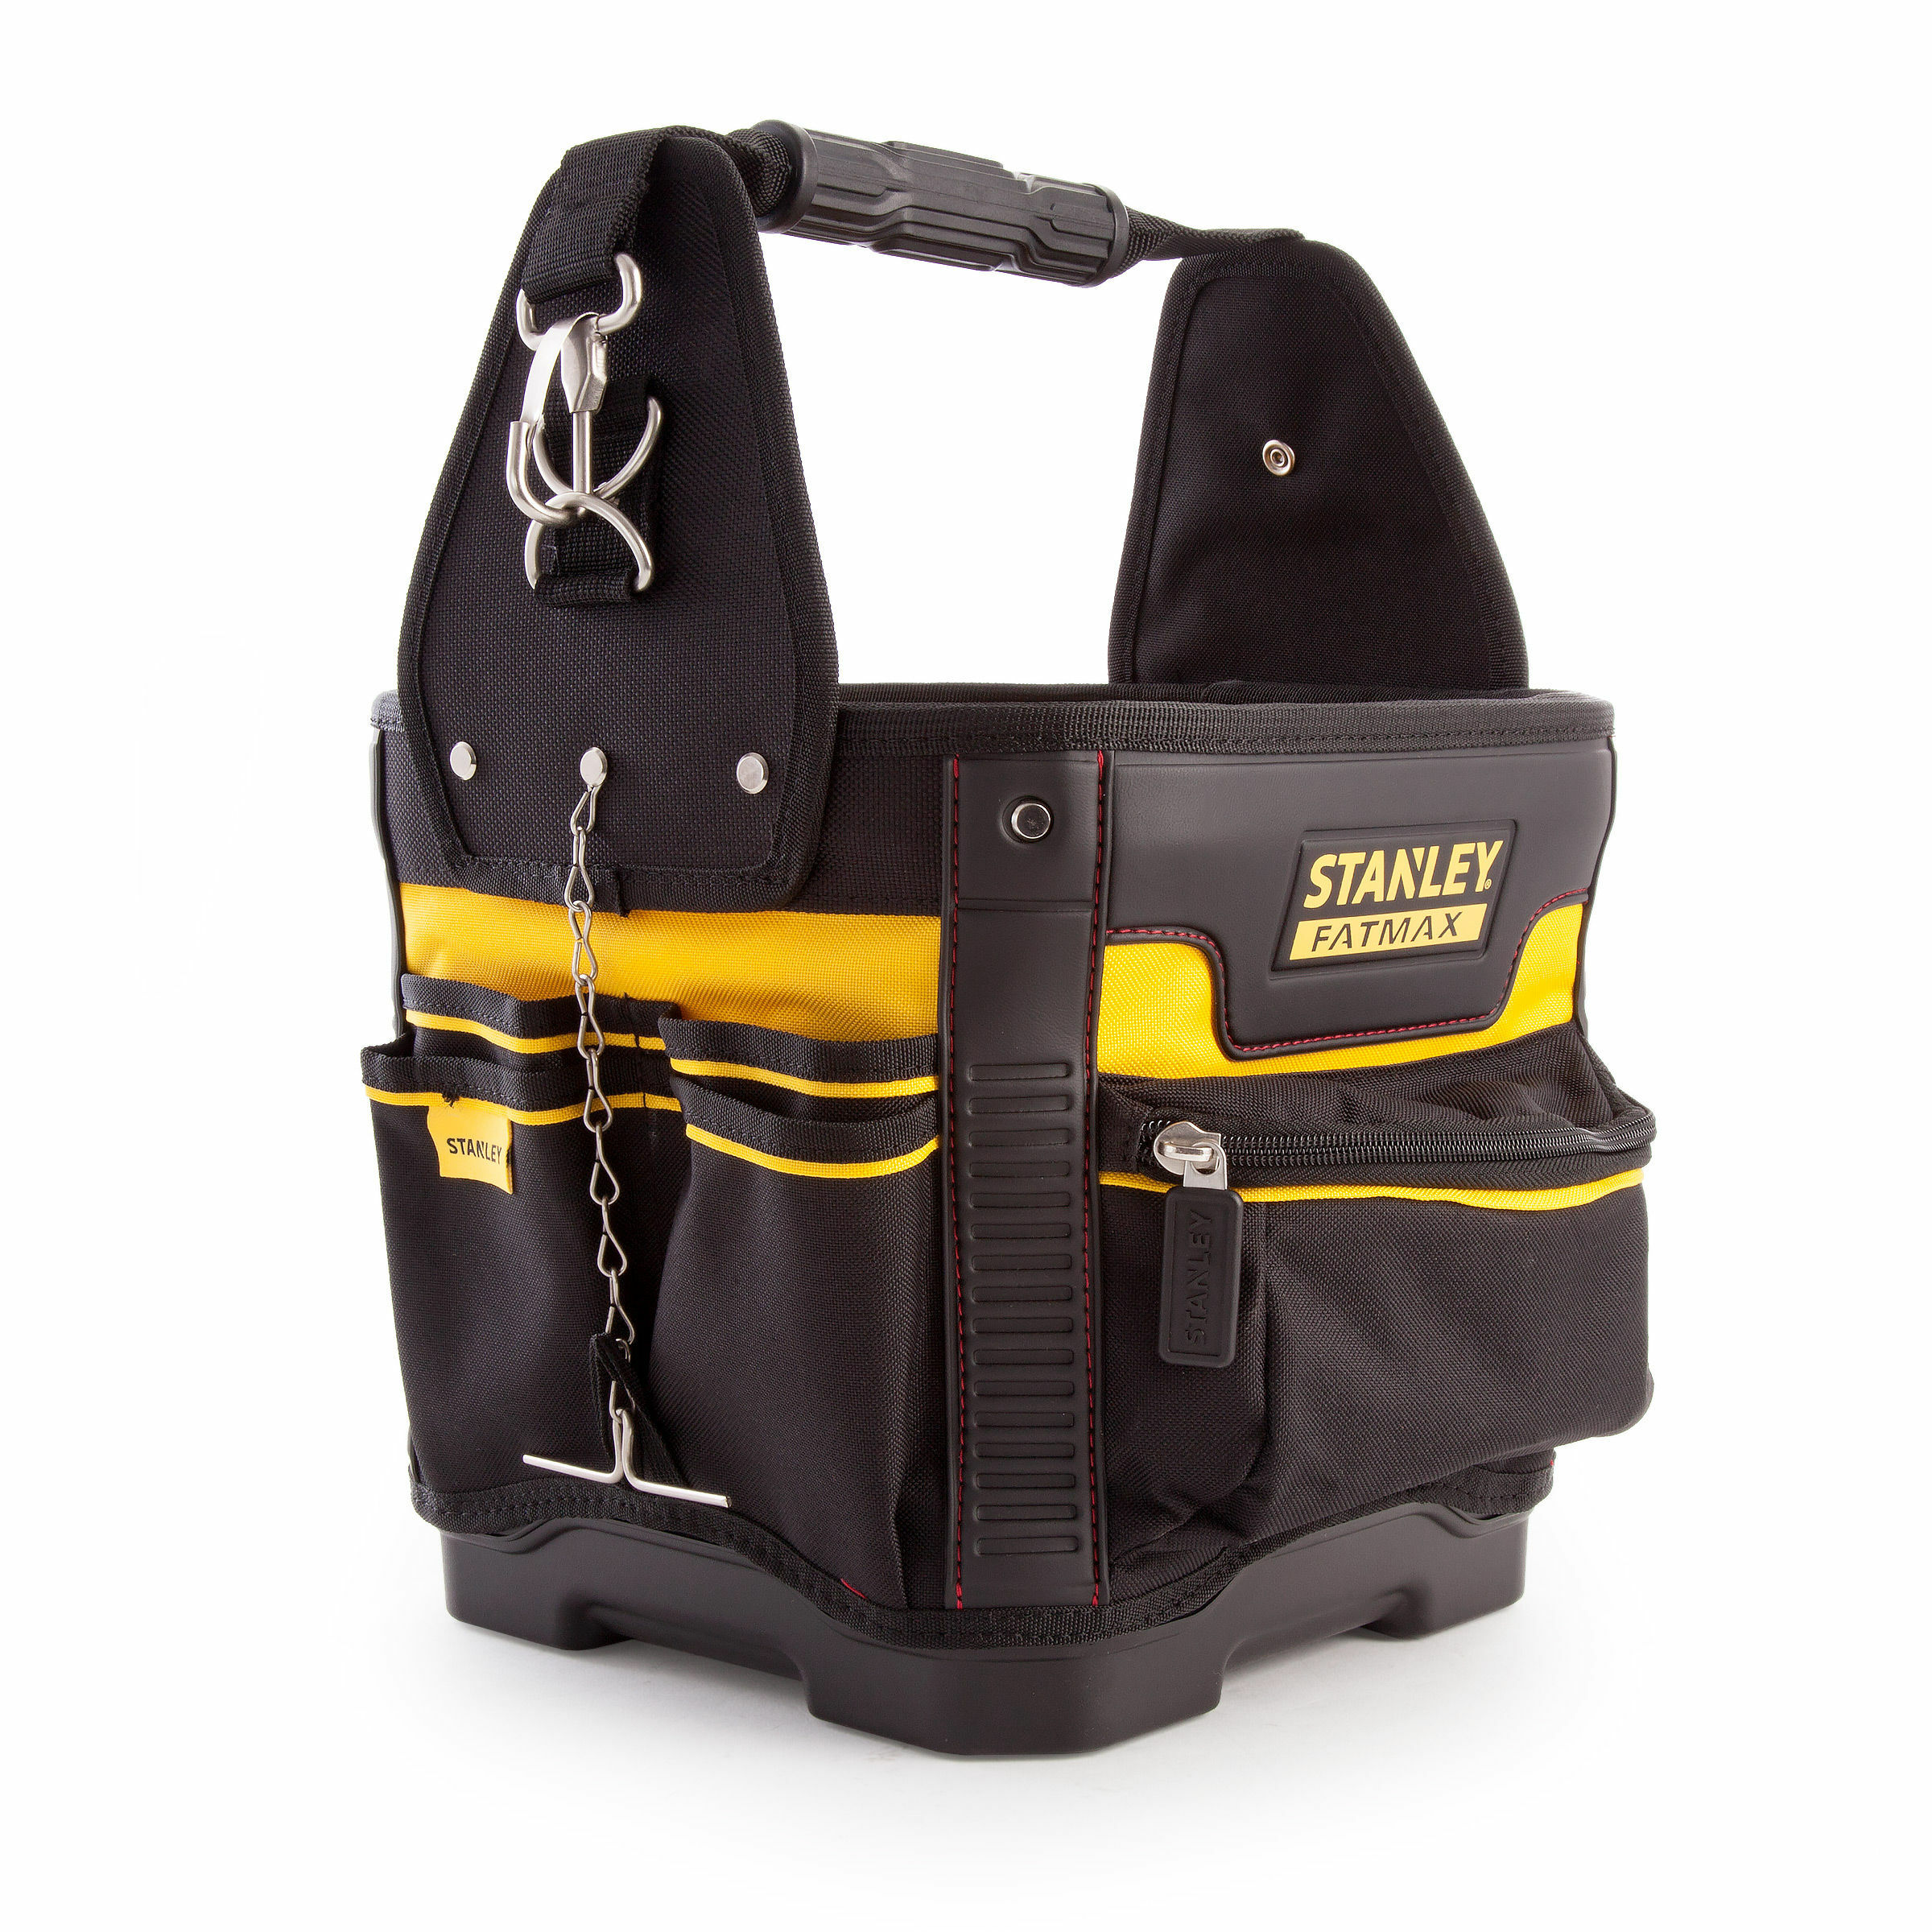 FATMAX® Technicians Tool Bag Stanley - 1